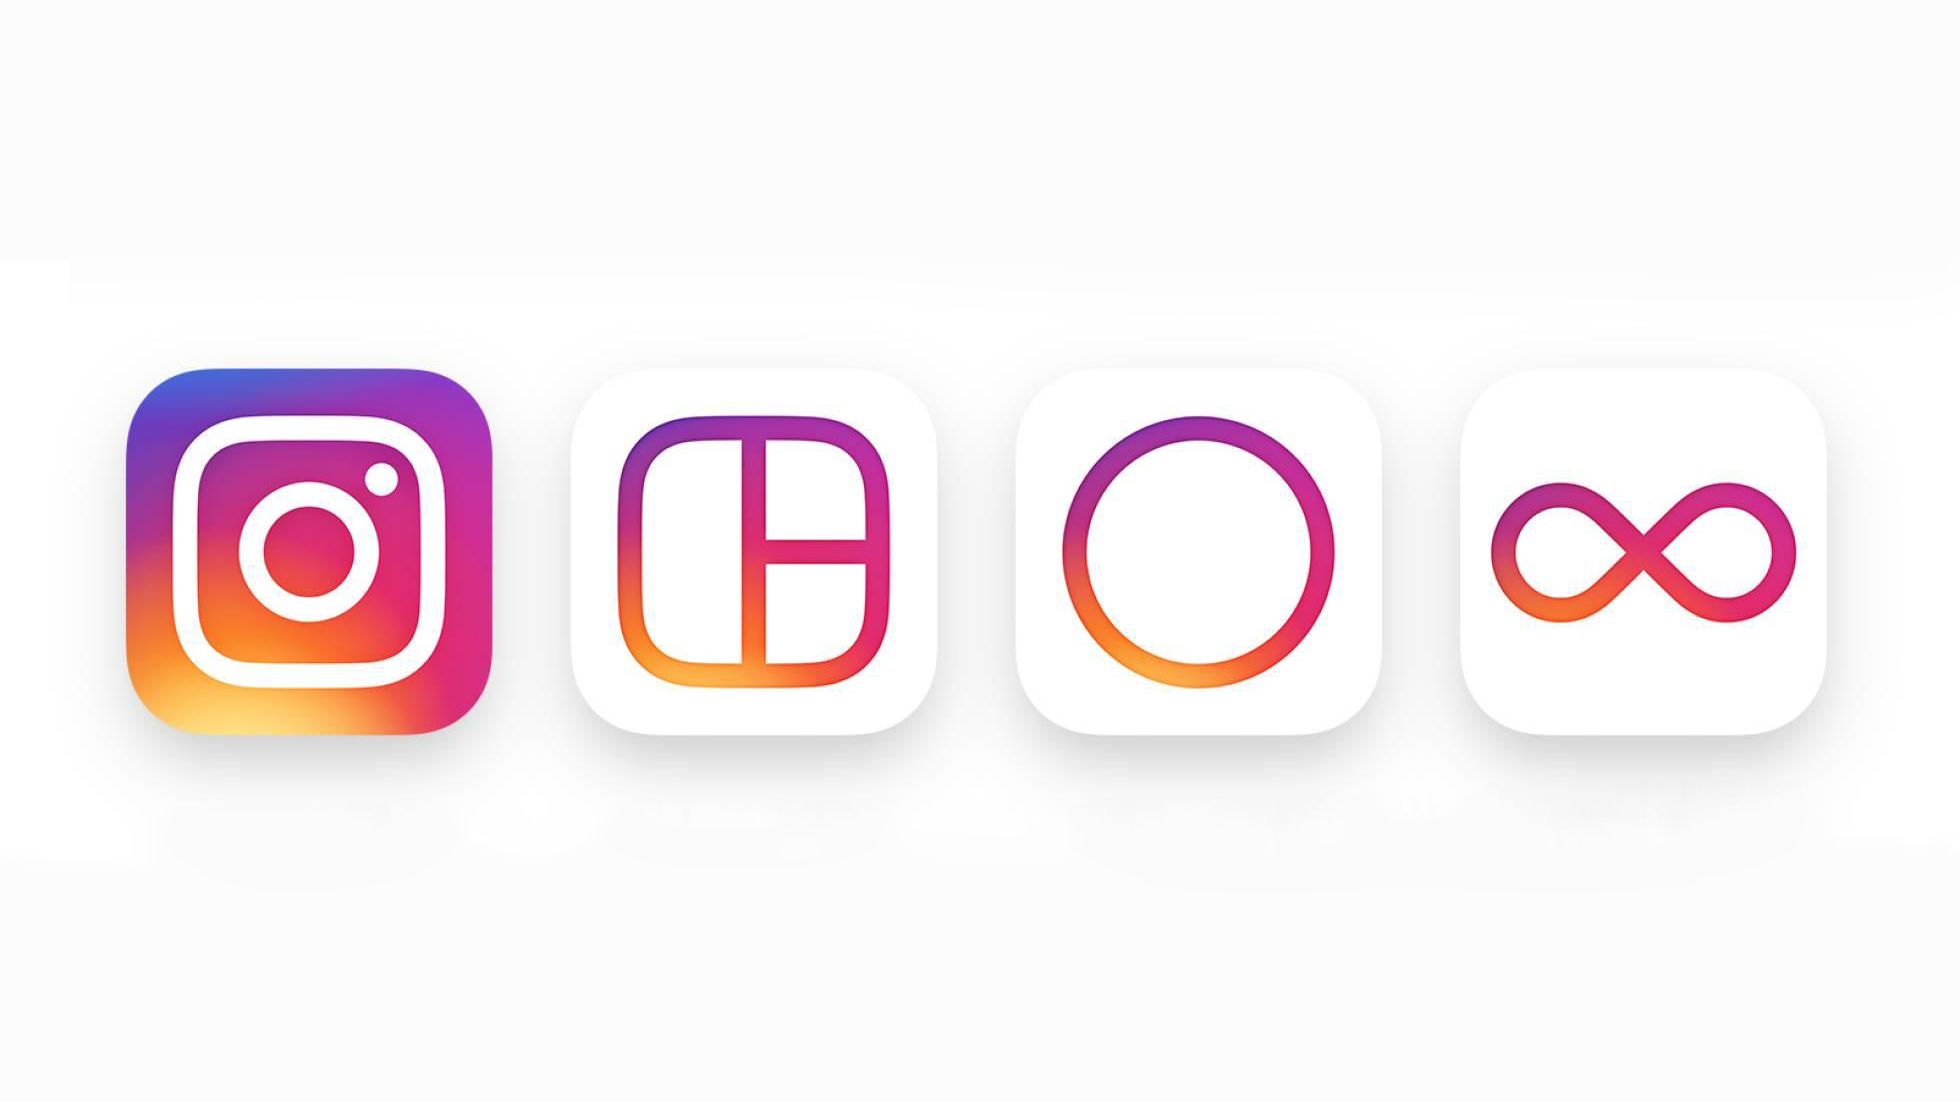 new instagram logo revealed